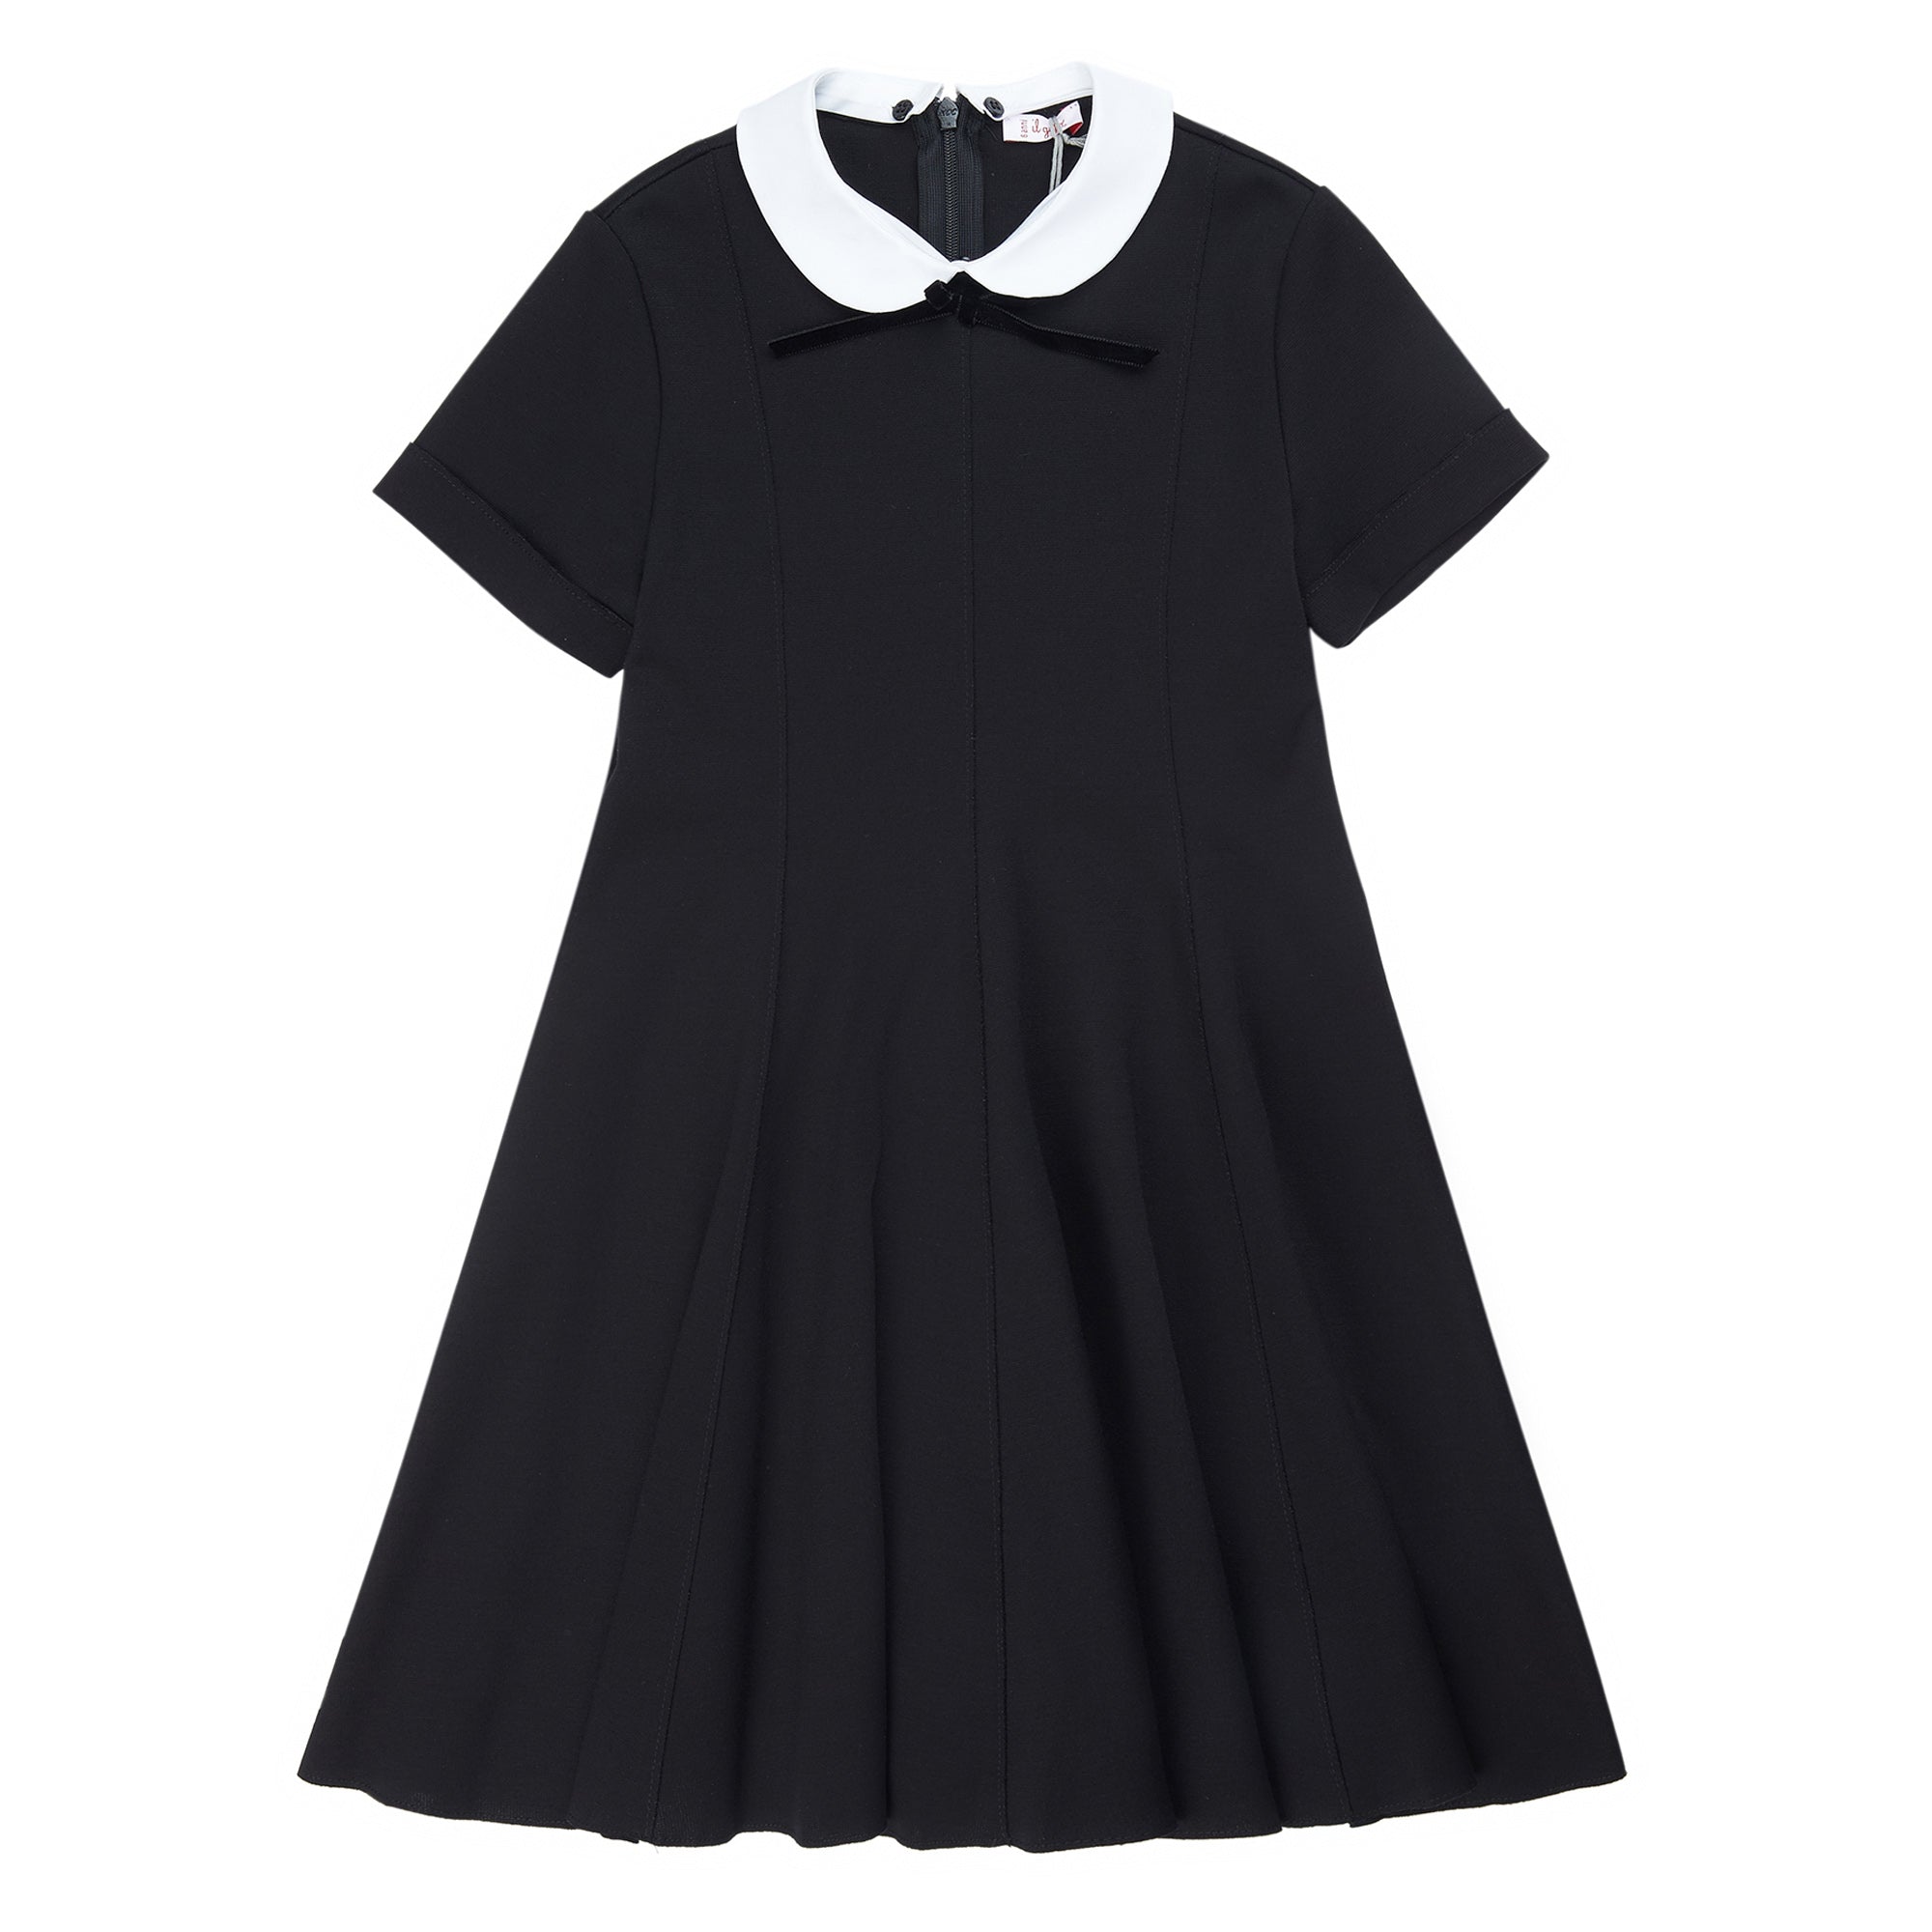 Girls Black & White Collar Dress